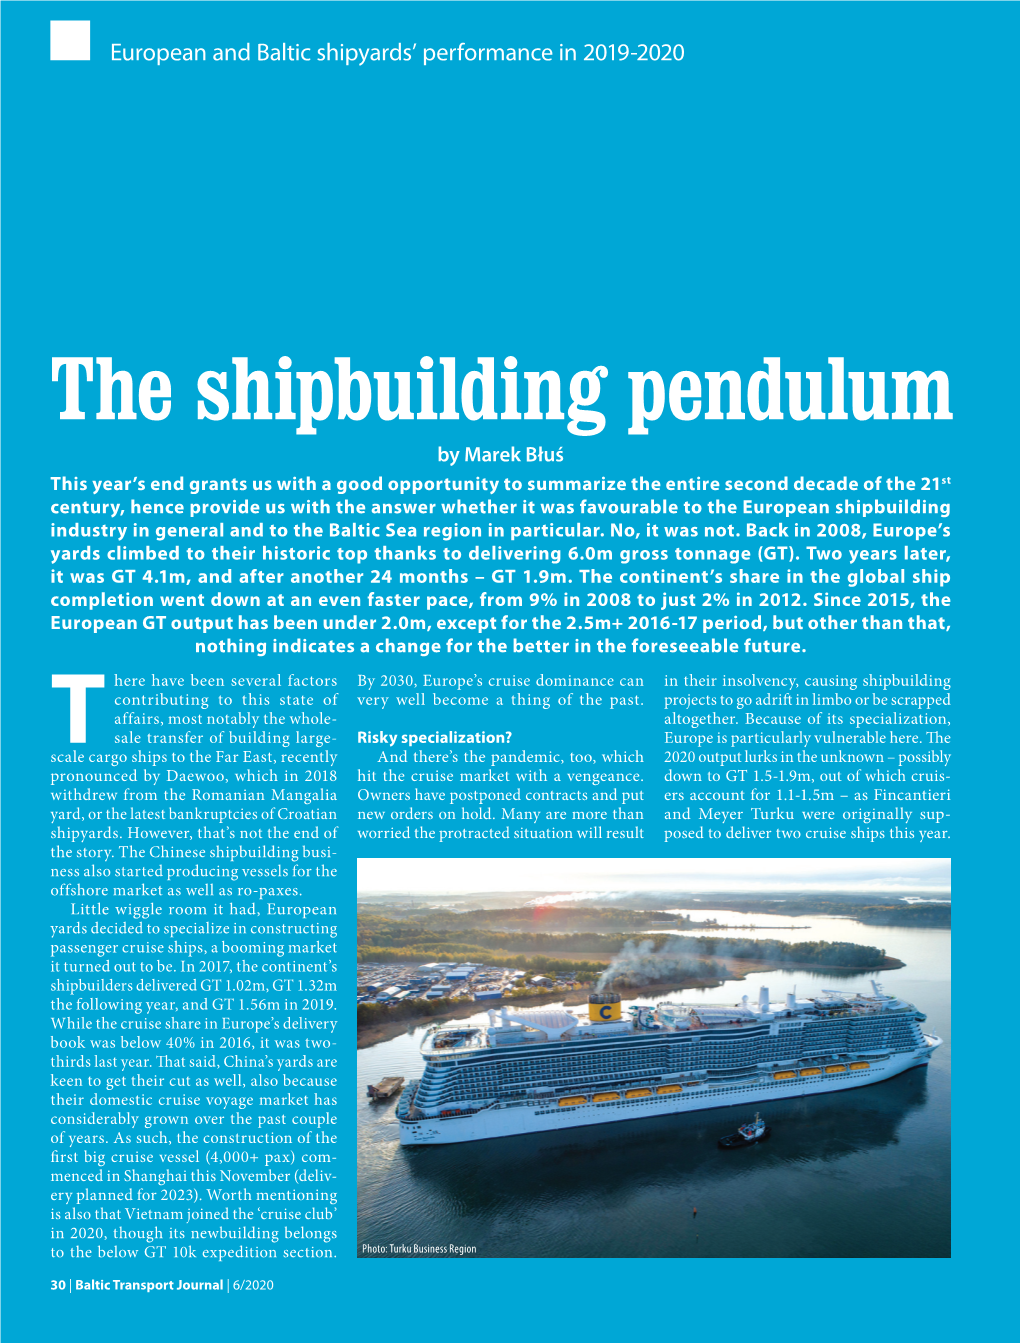 The Shipbuilding Pendulum